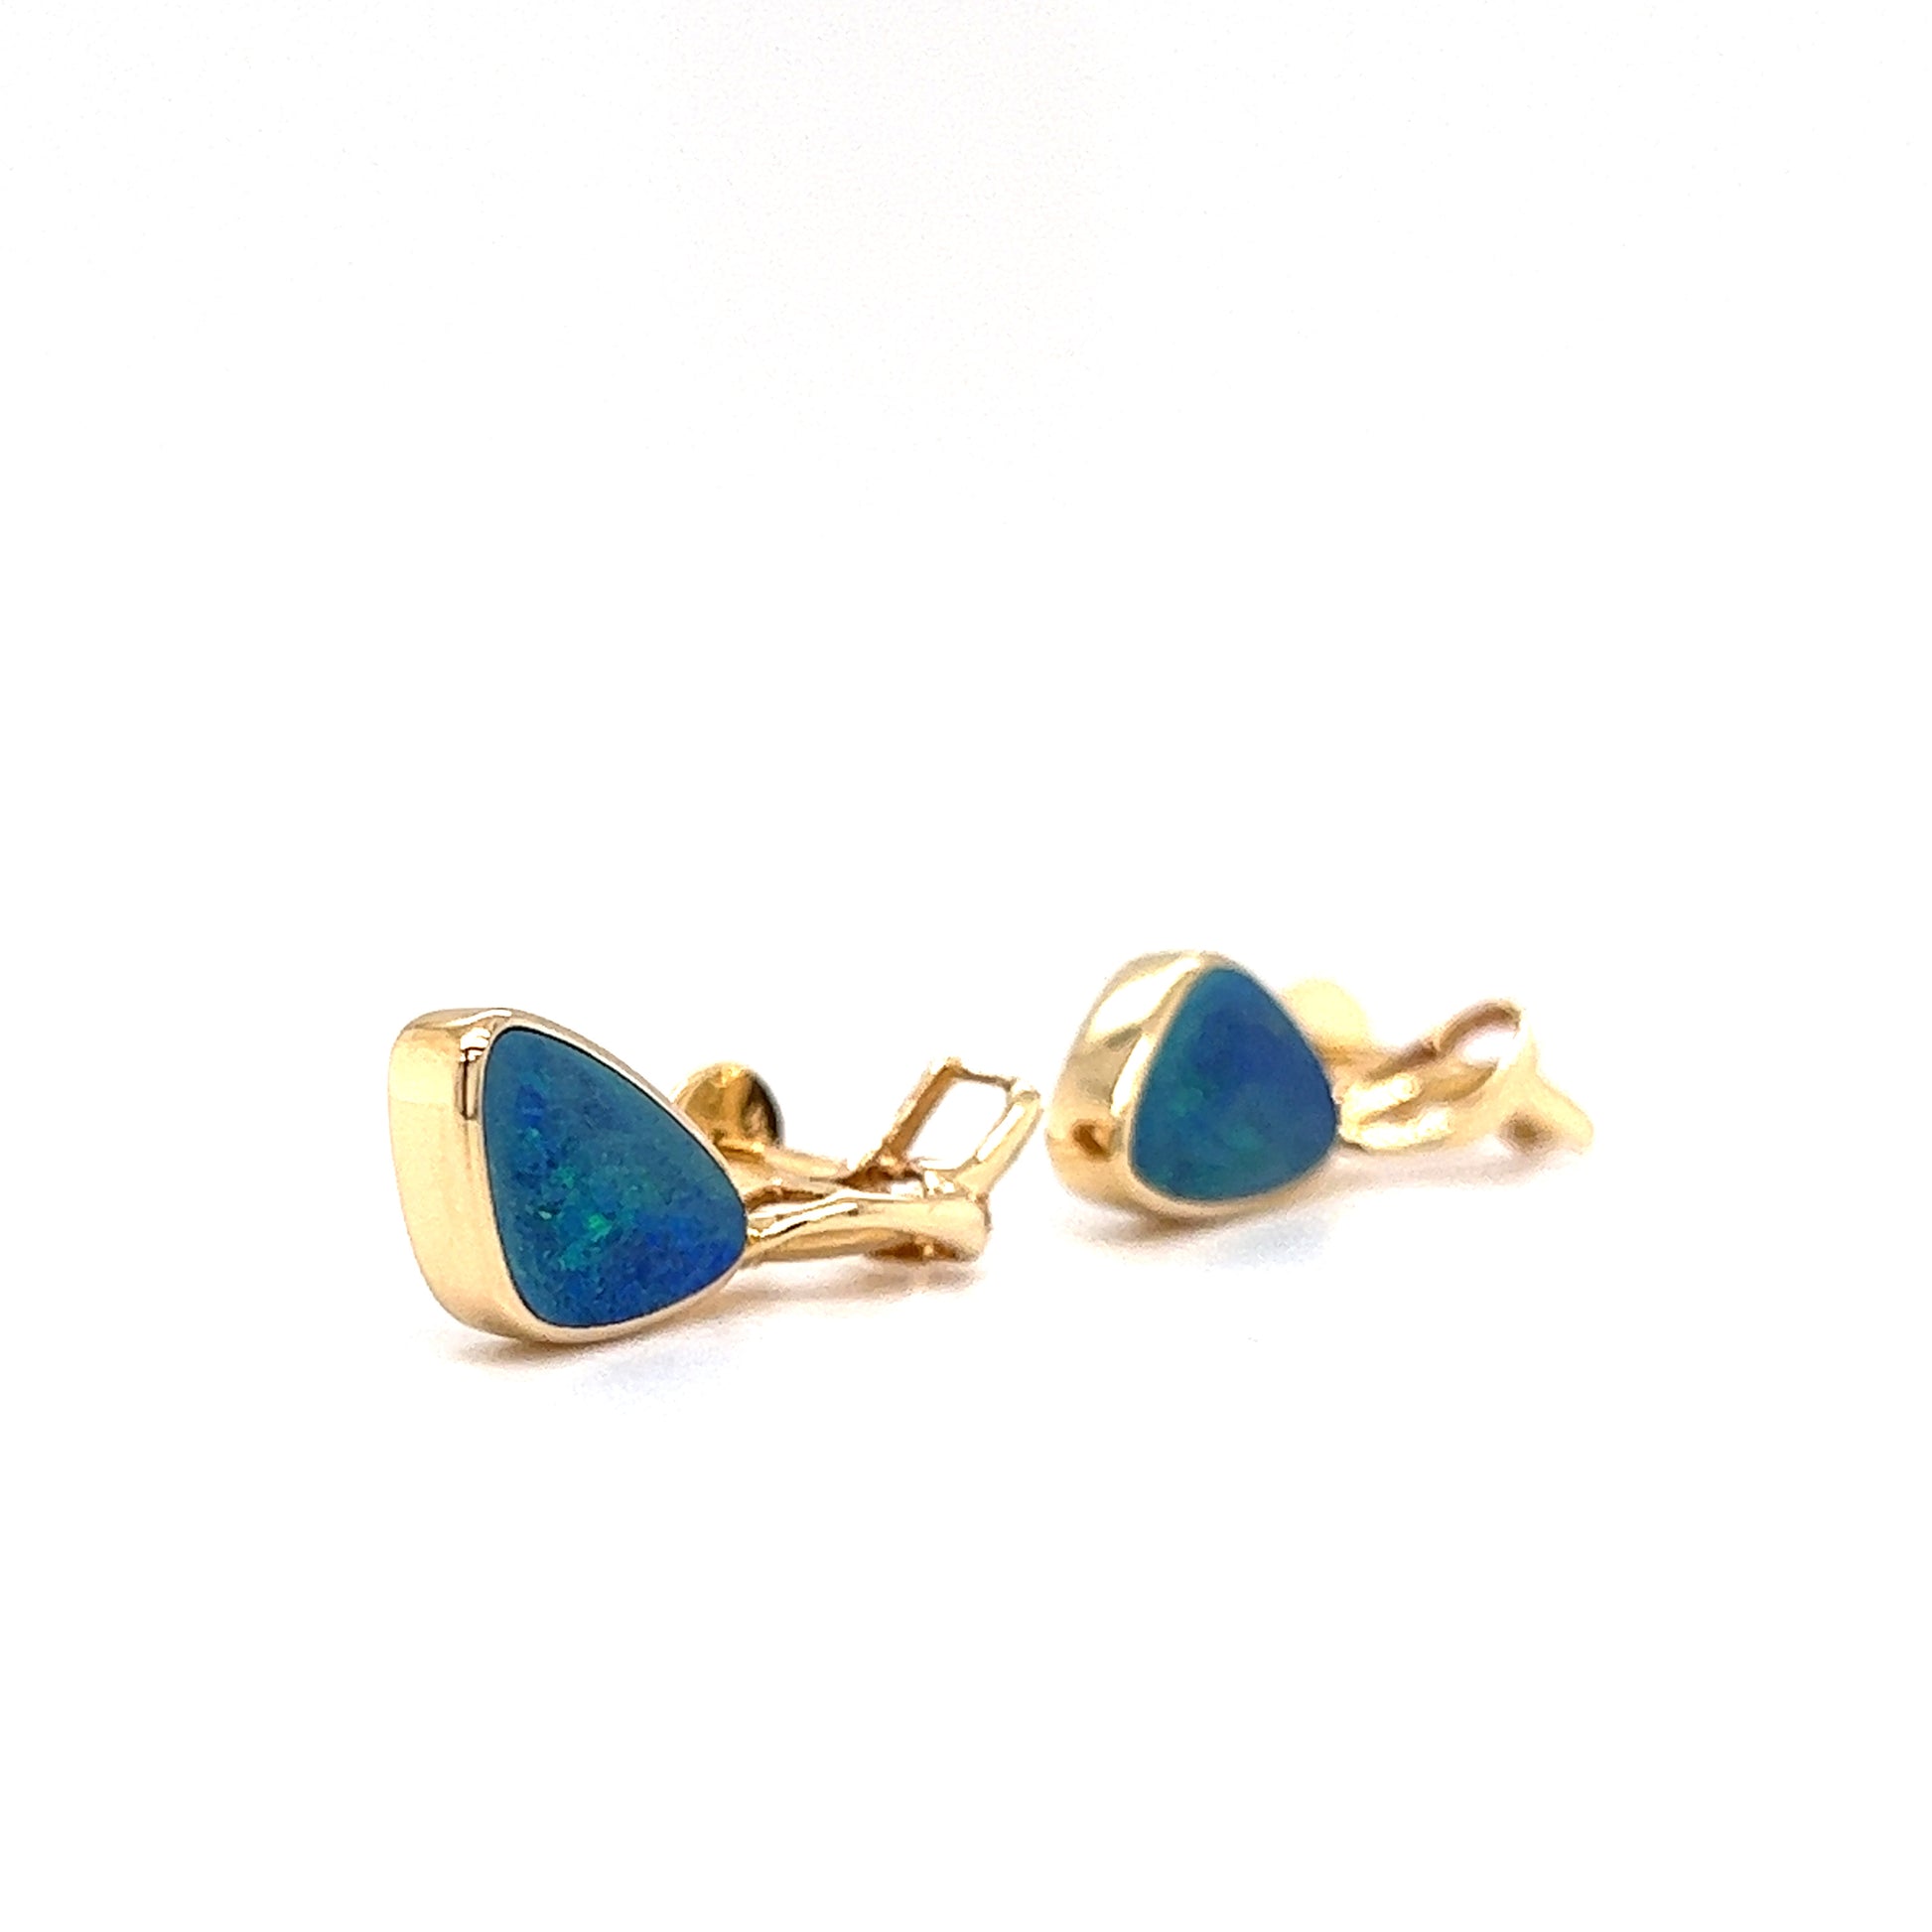 Black Opal Drop Earrings with 3.28ctw of Opal in 14K Yellow Gold Left Side View